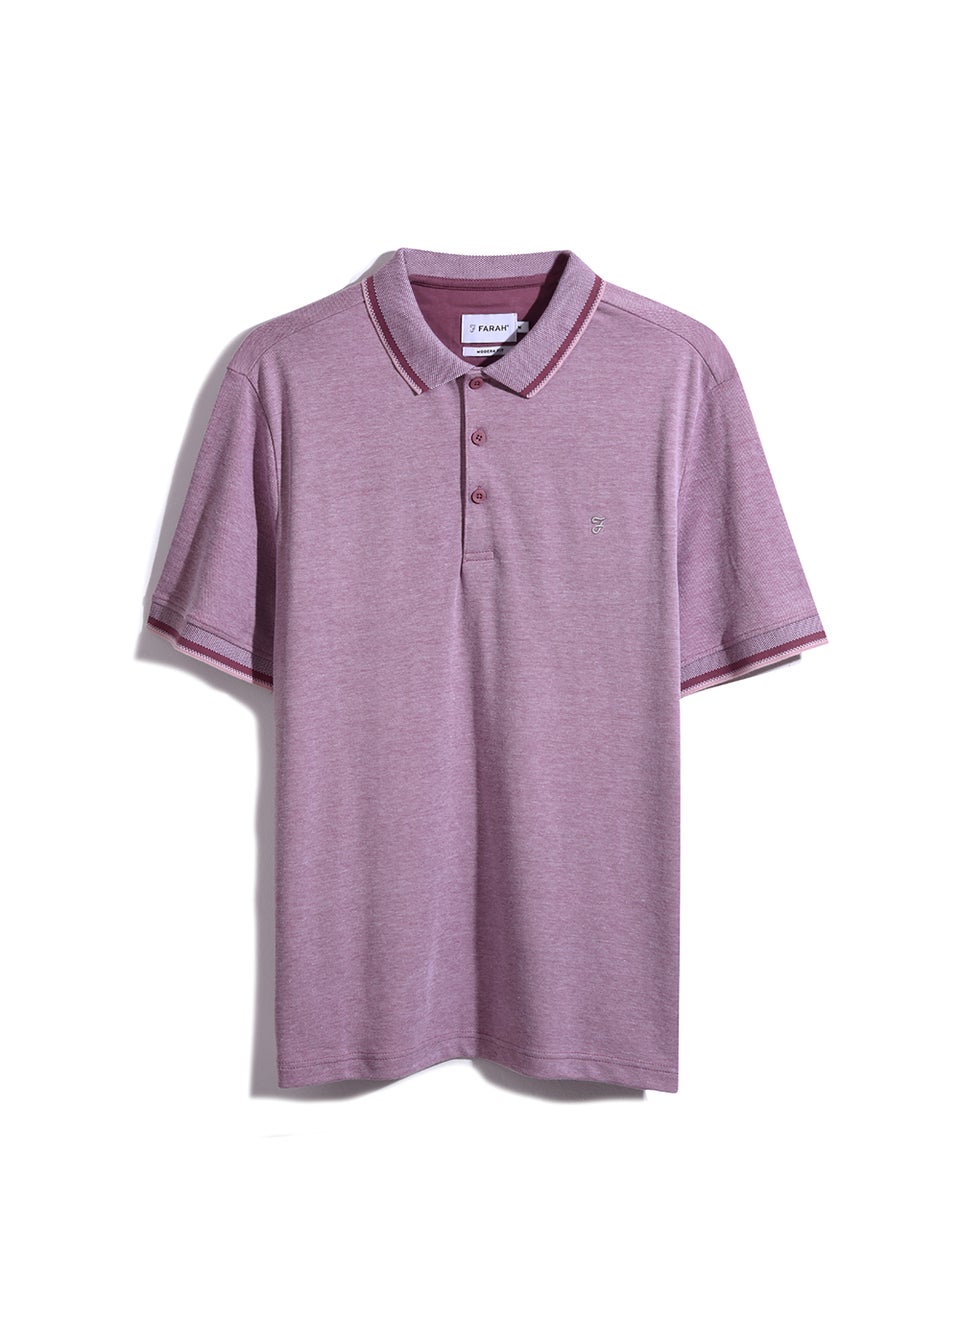 Farah Larry Purple Polo Shirt - Matalan